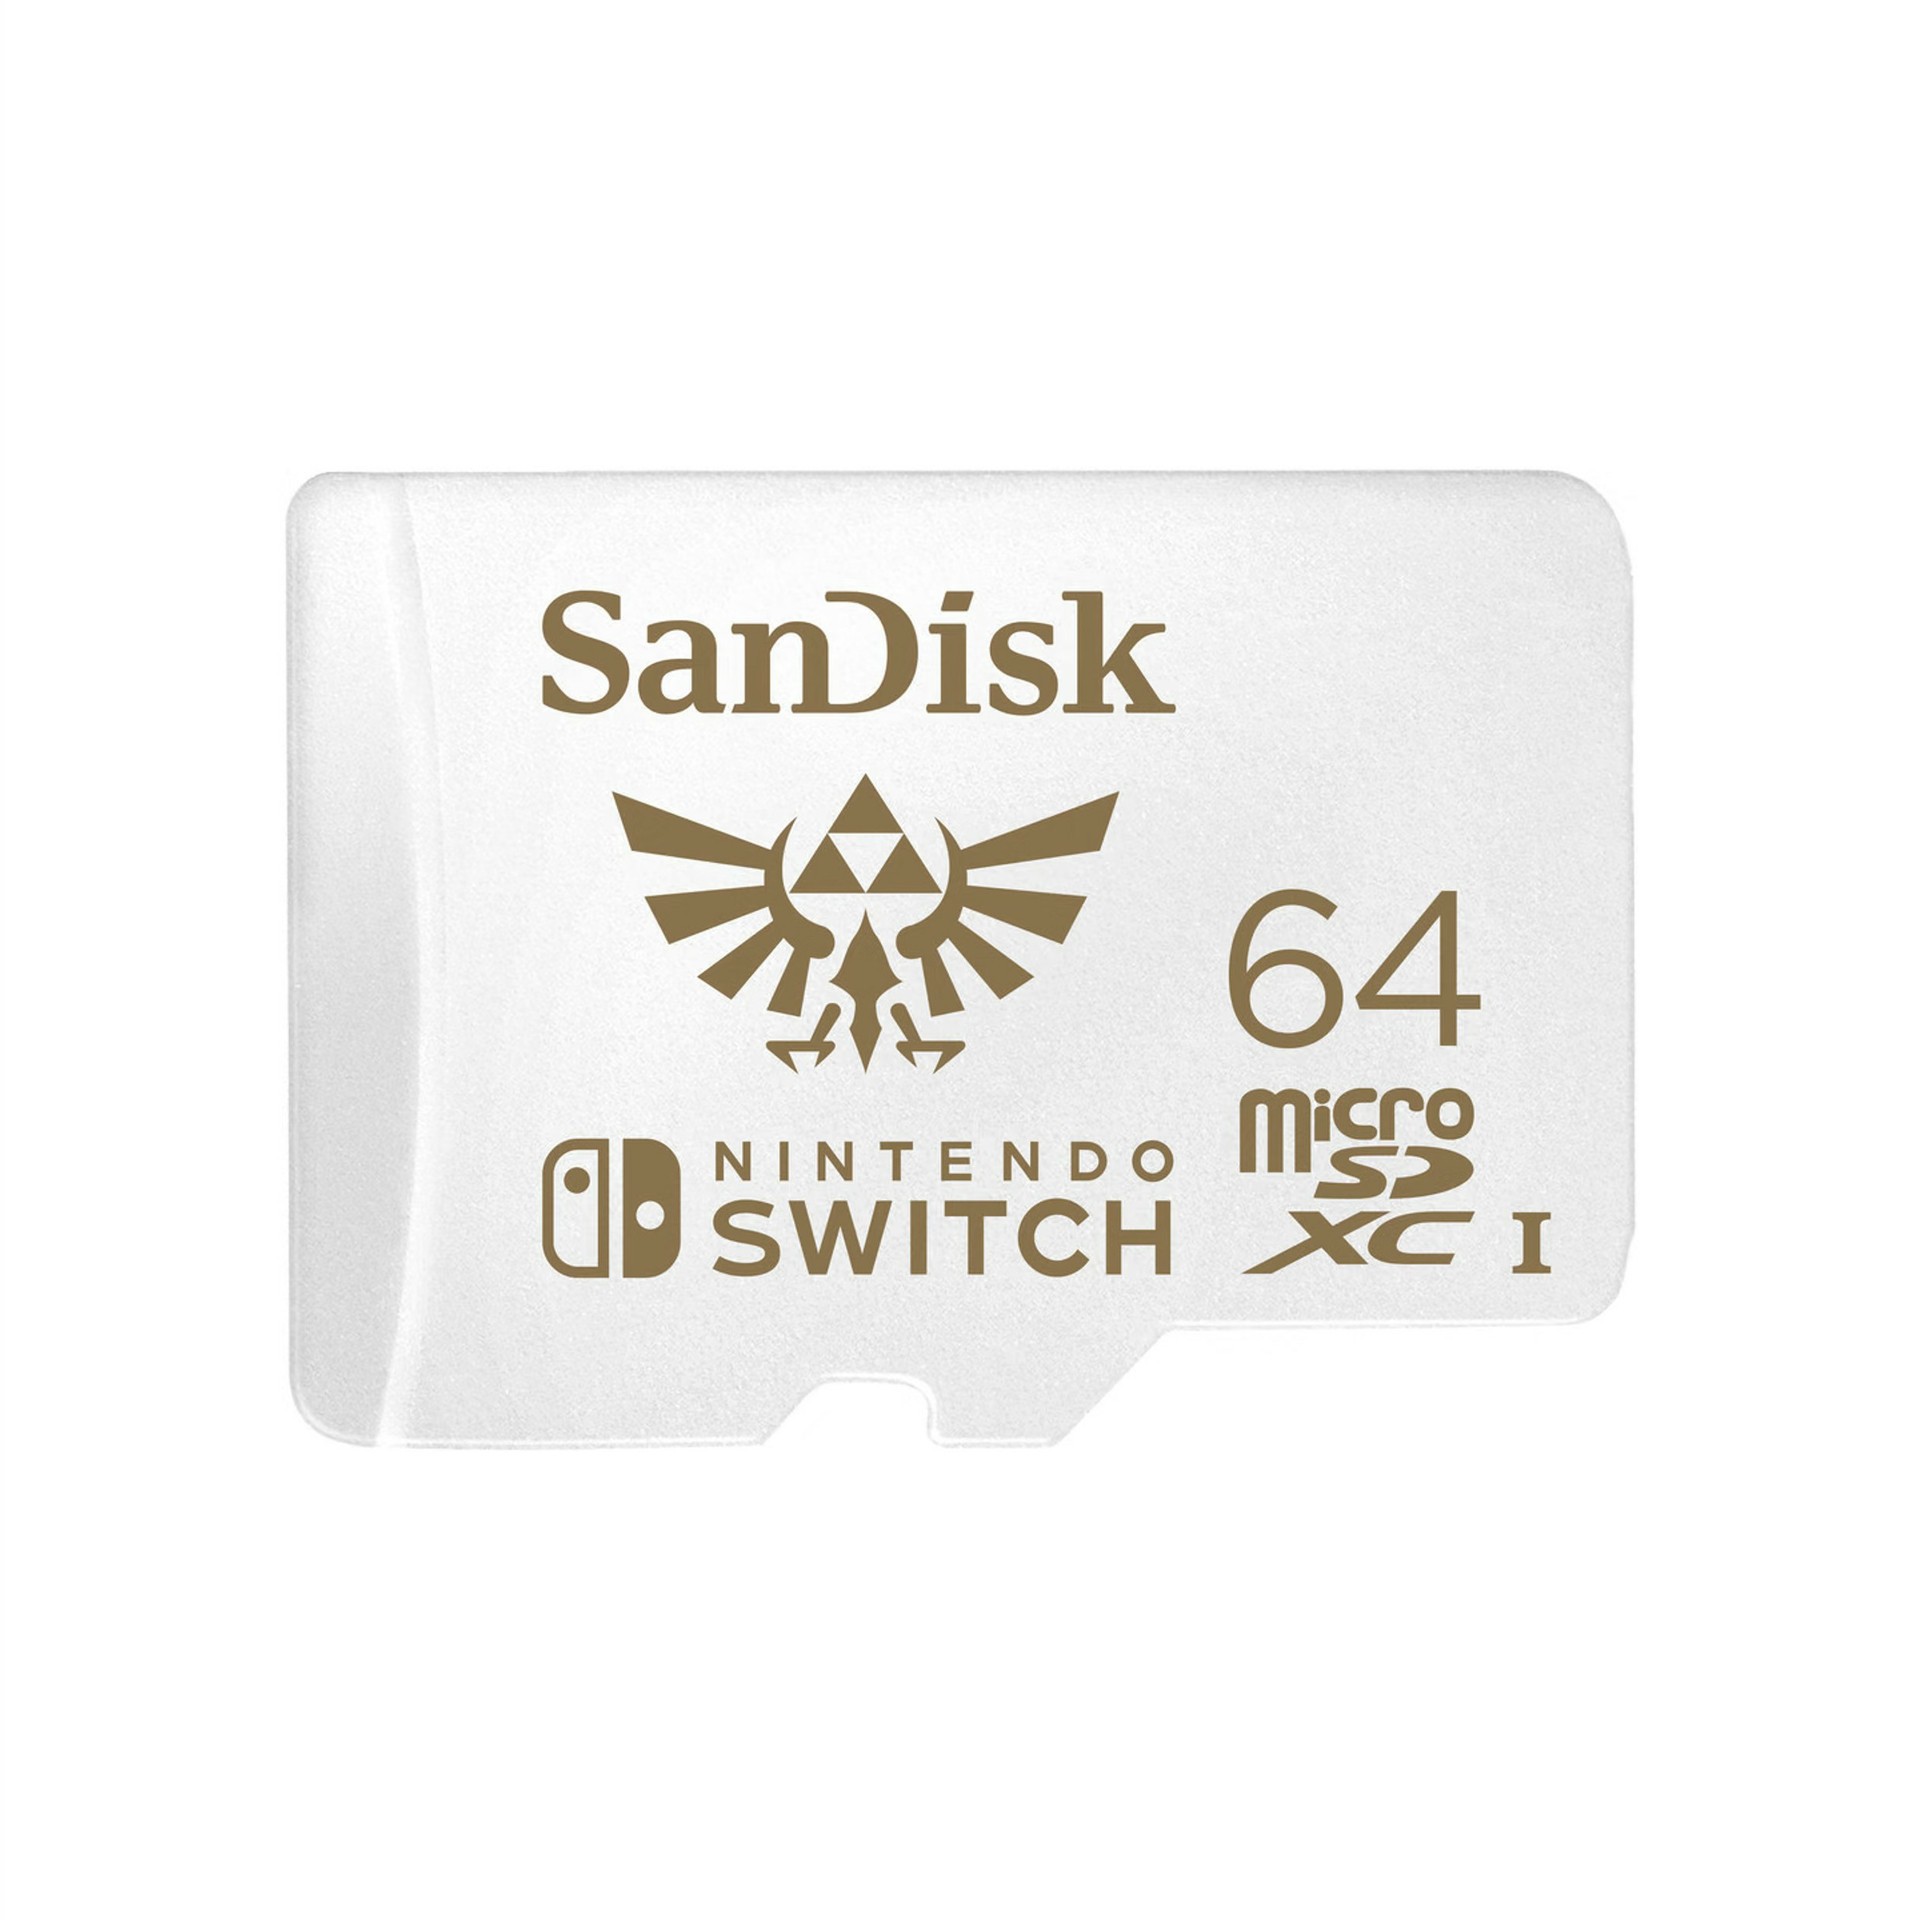 SanDisk MicroSDXC 64GB - Legend of Zelda + microSD Adapter - Nintendo Switch Hardware - 2